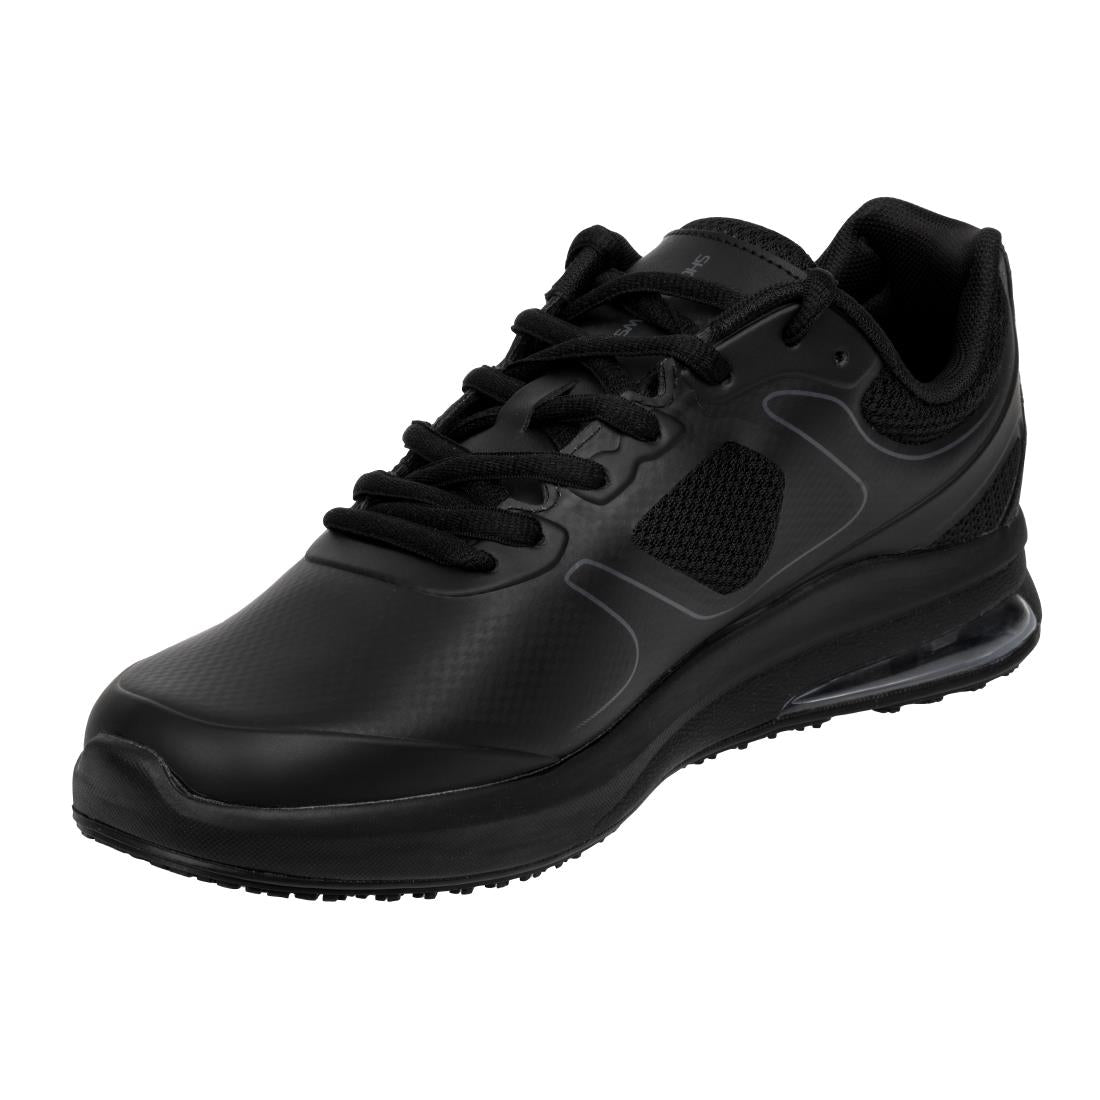 BB586-40 Shoes for Crews Men's Evolution Trainers Black Size 40